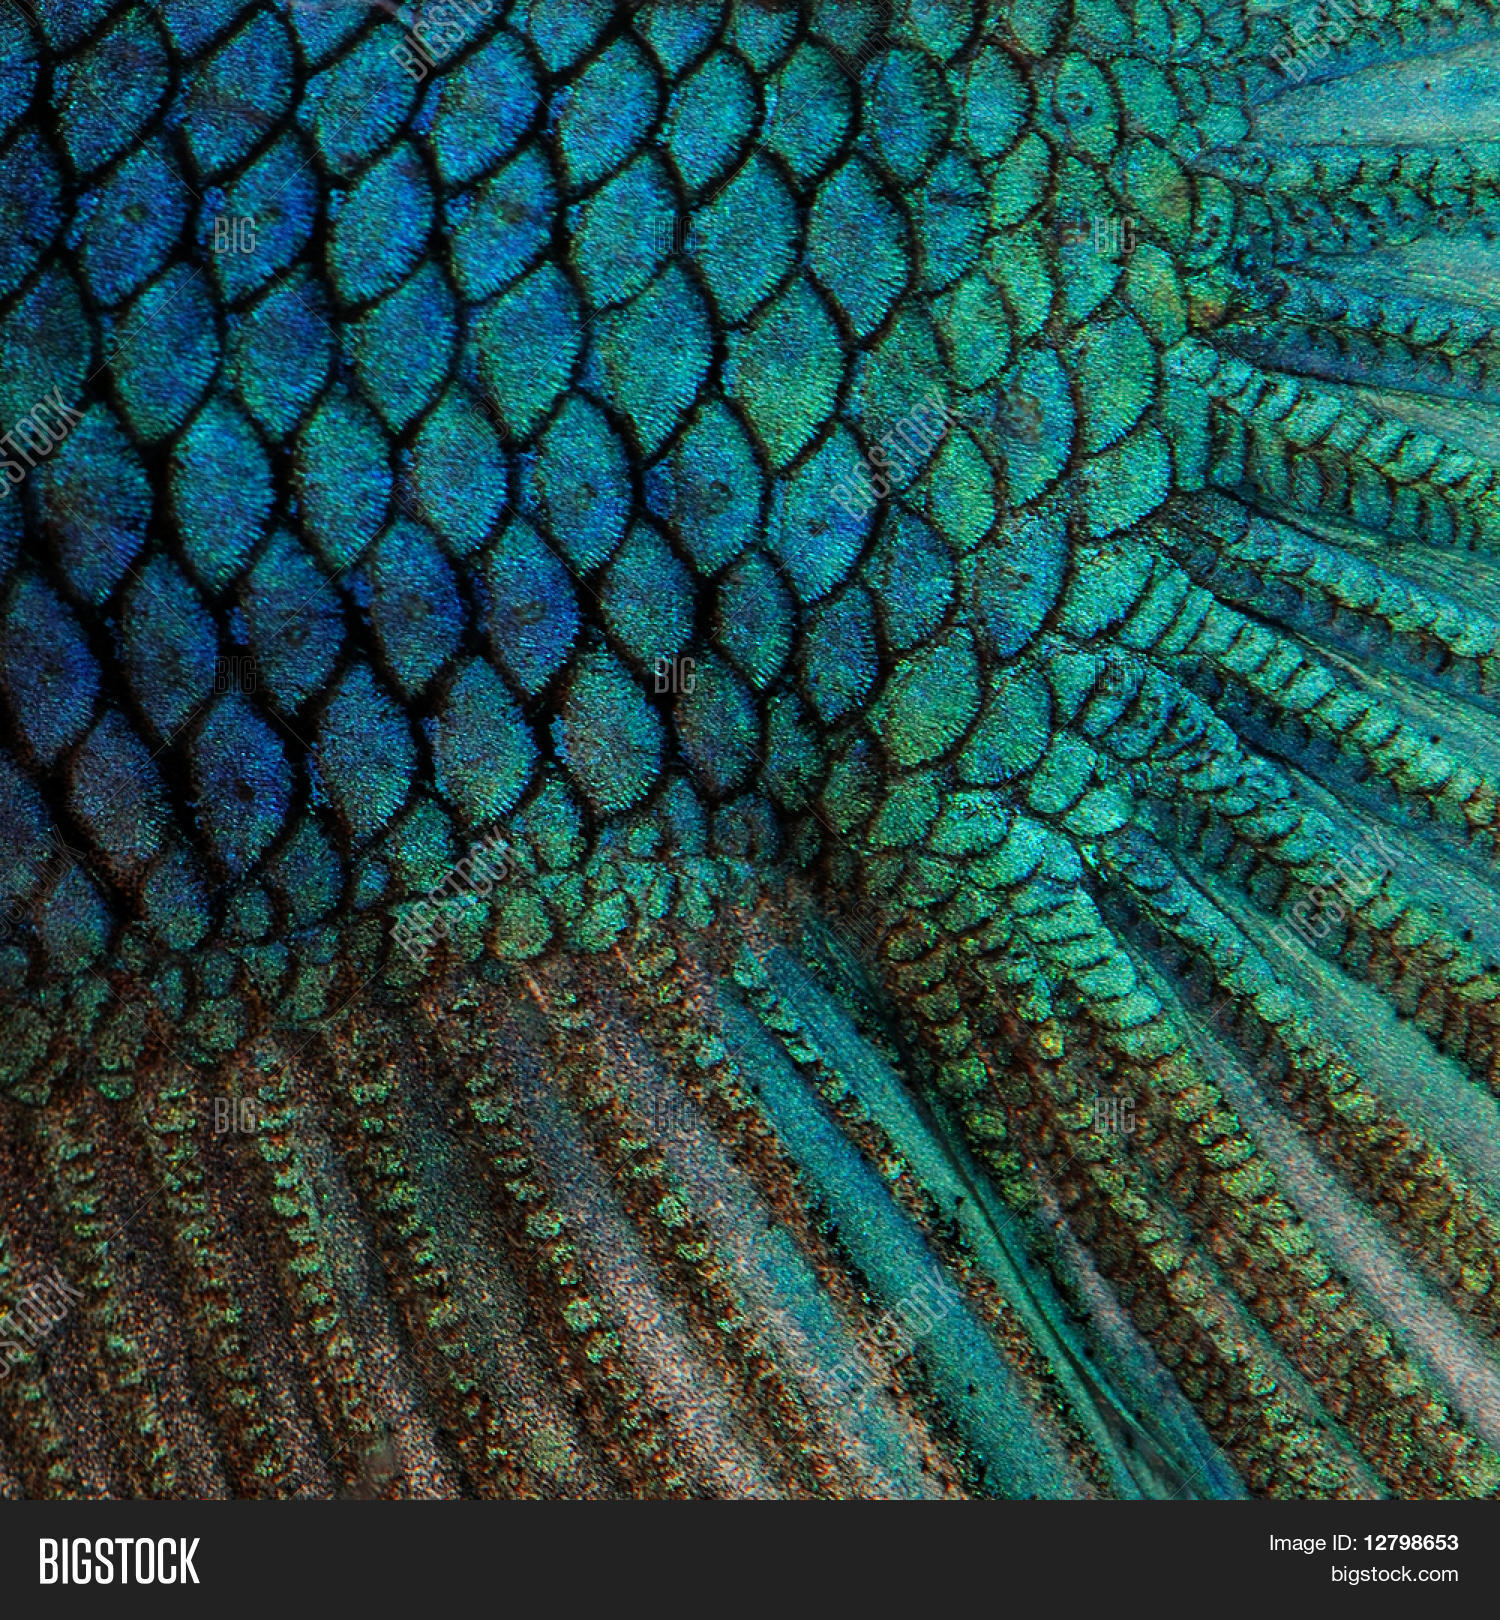 Fish scale texture photo